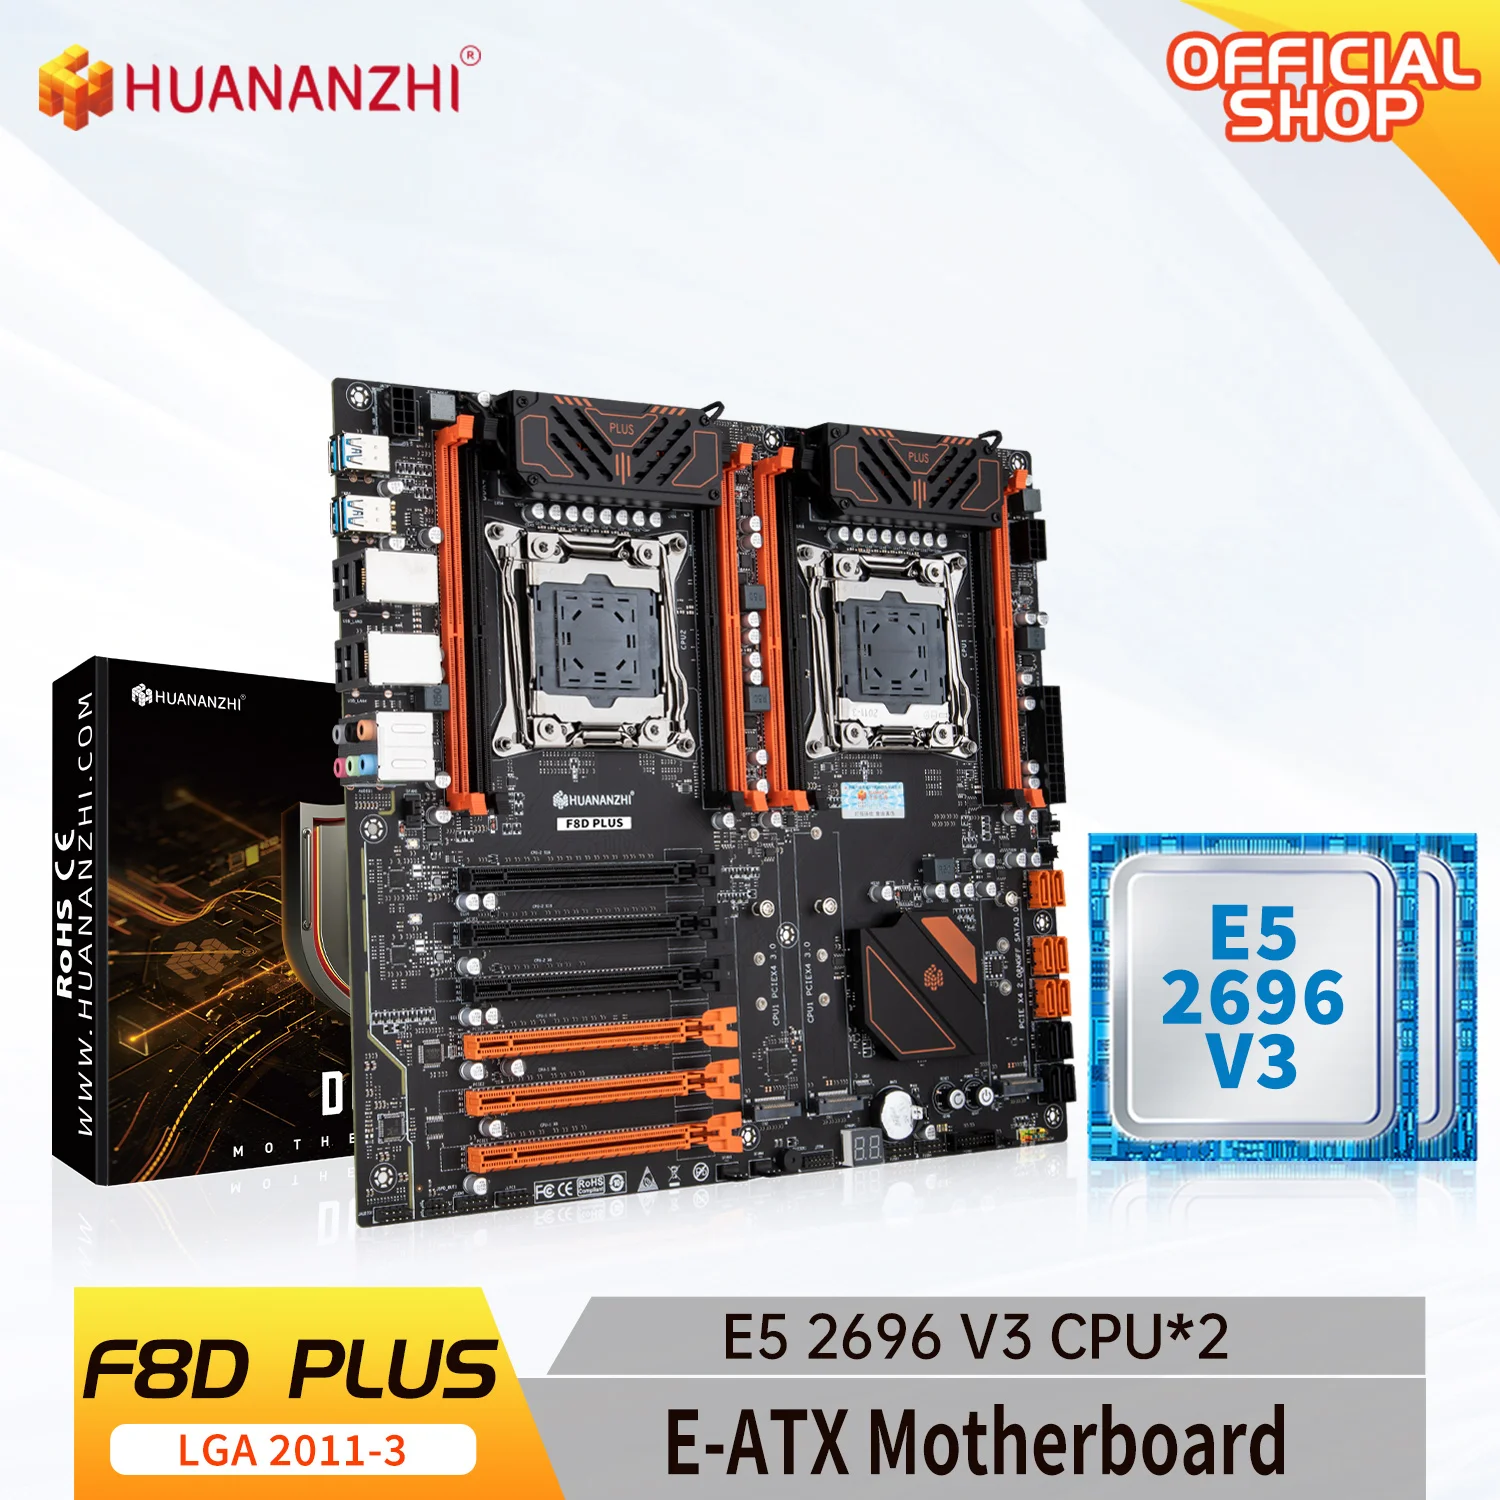 

HUANANZHI X99 F8D PLUS LGA 2011-3 XEON X99 Motherboard with Intel E5 2696 V3 *2 combo kit set support DDR4 RECC NON-ECC